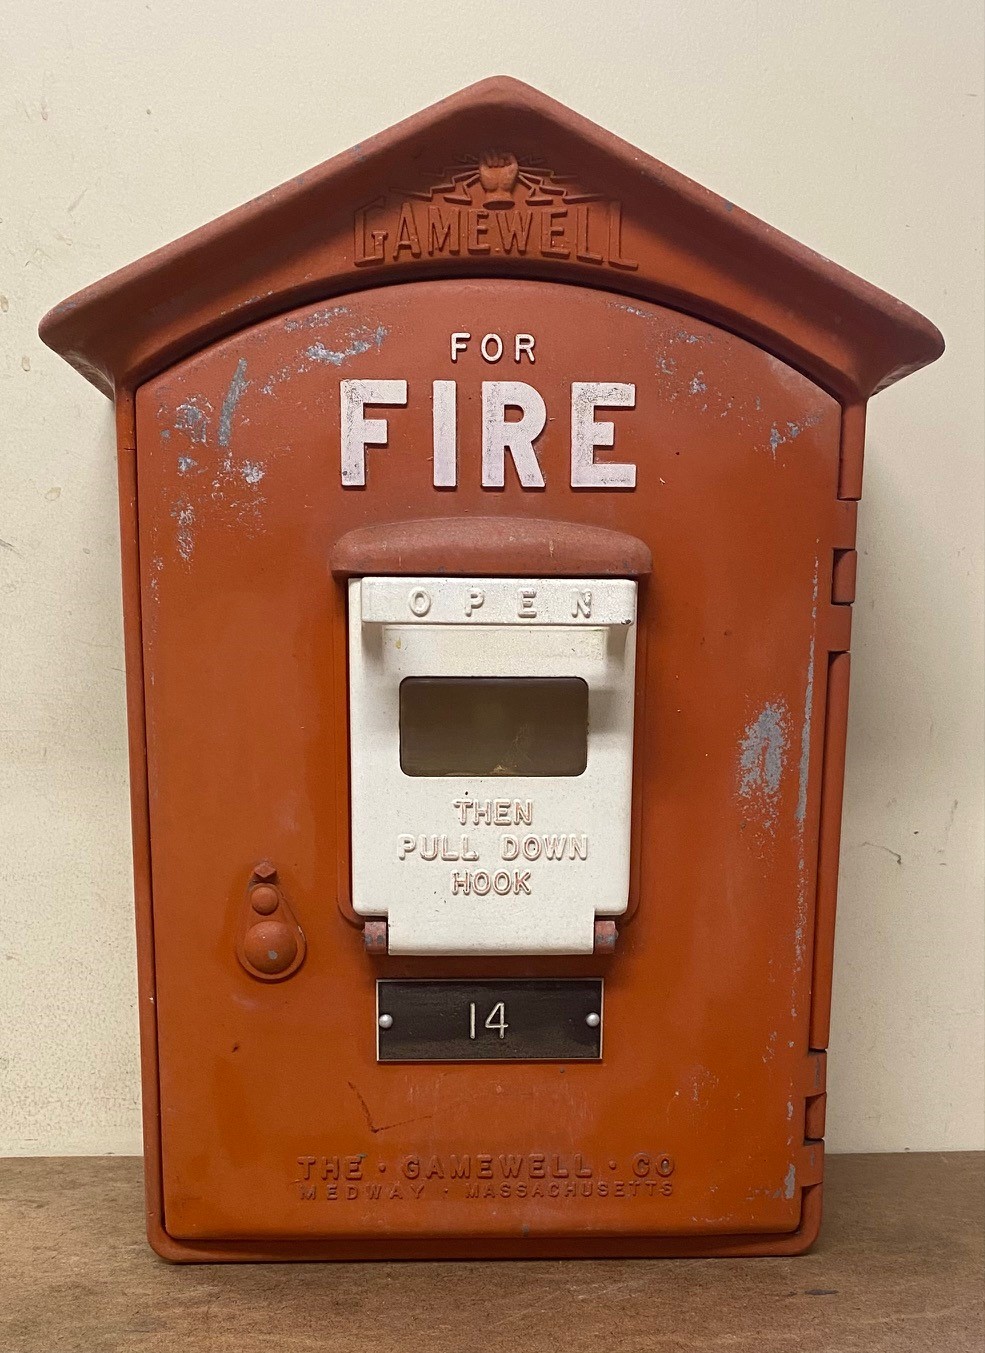 Gamewell Fire Alarm Box #14